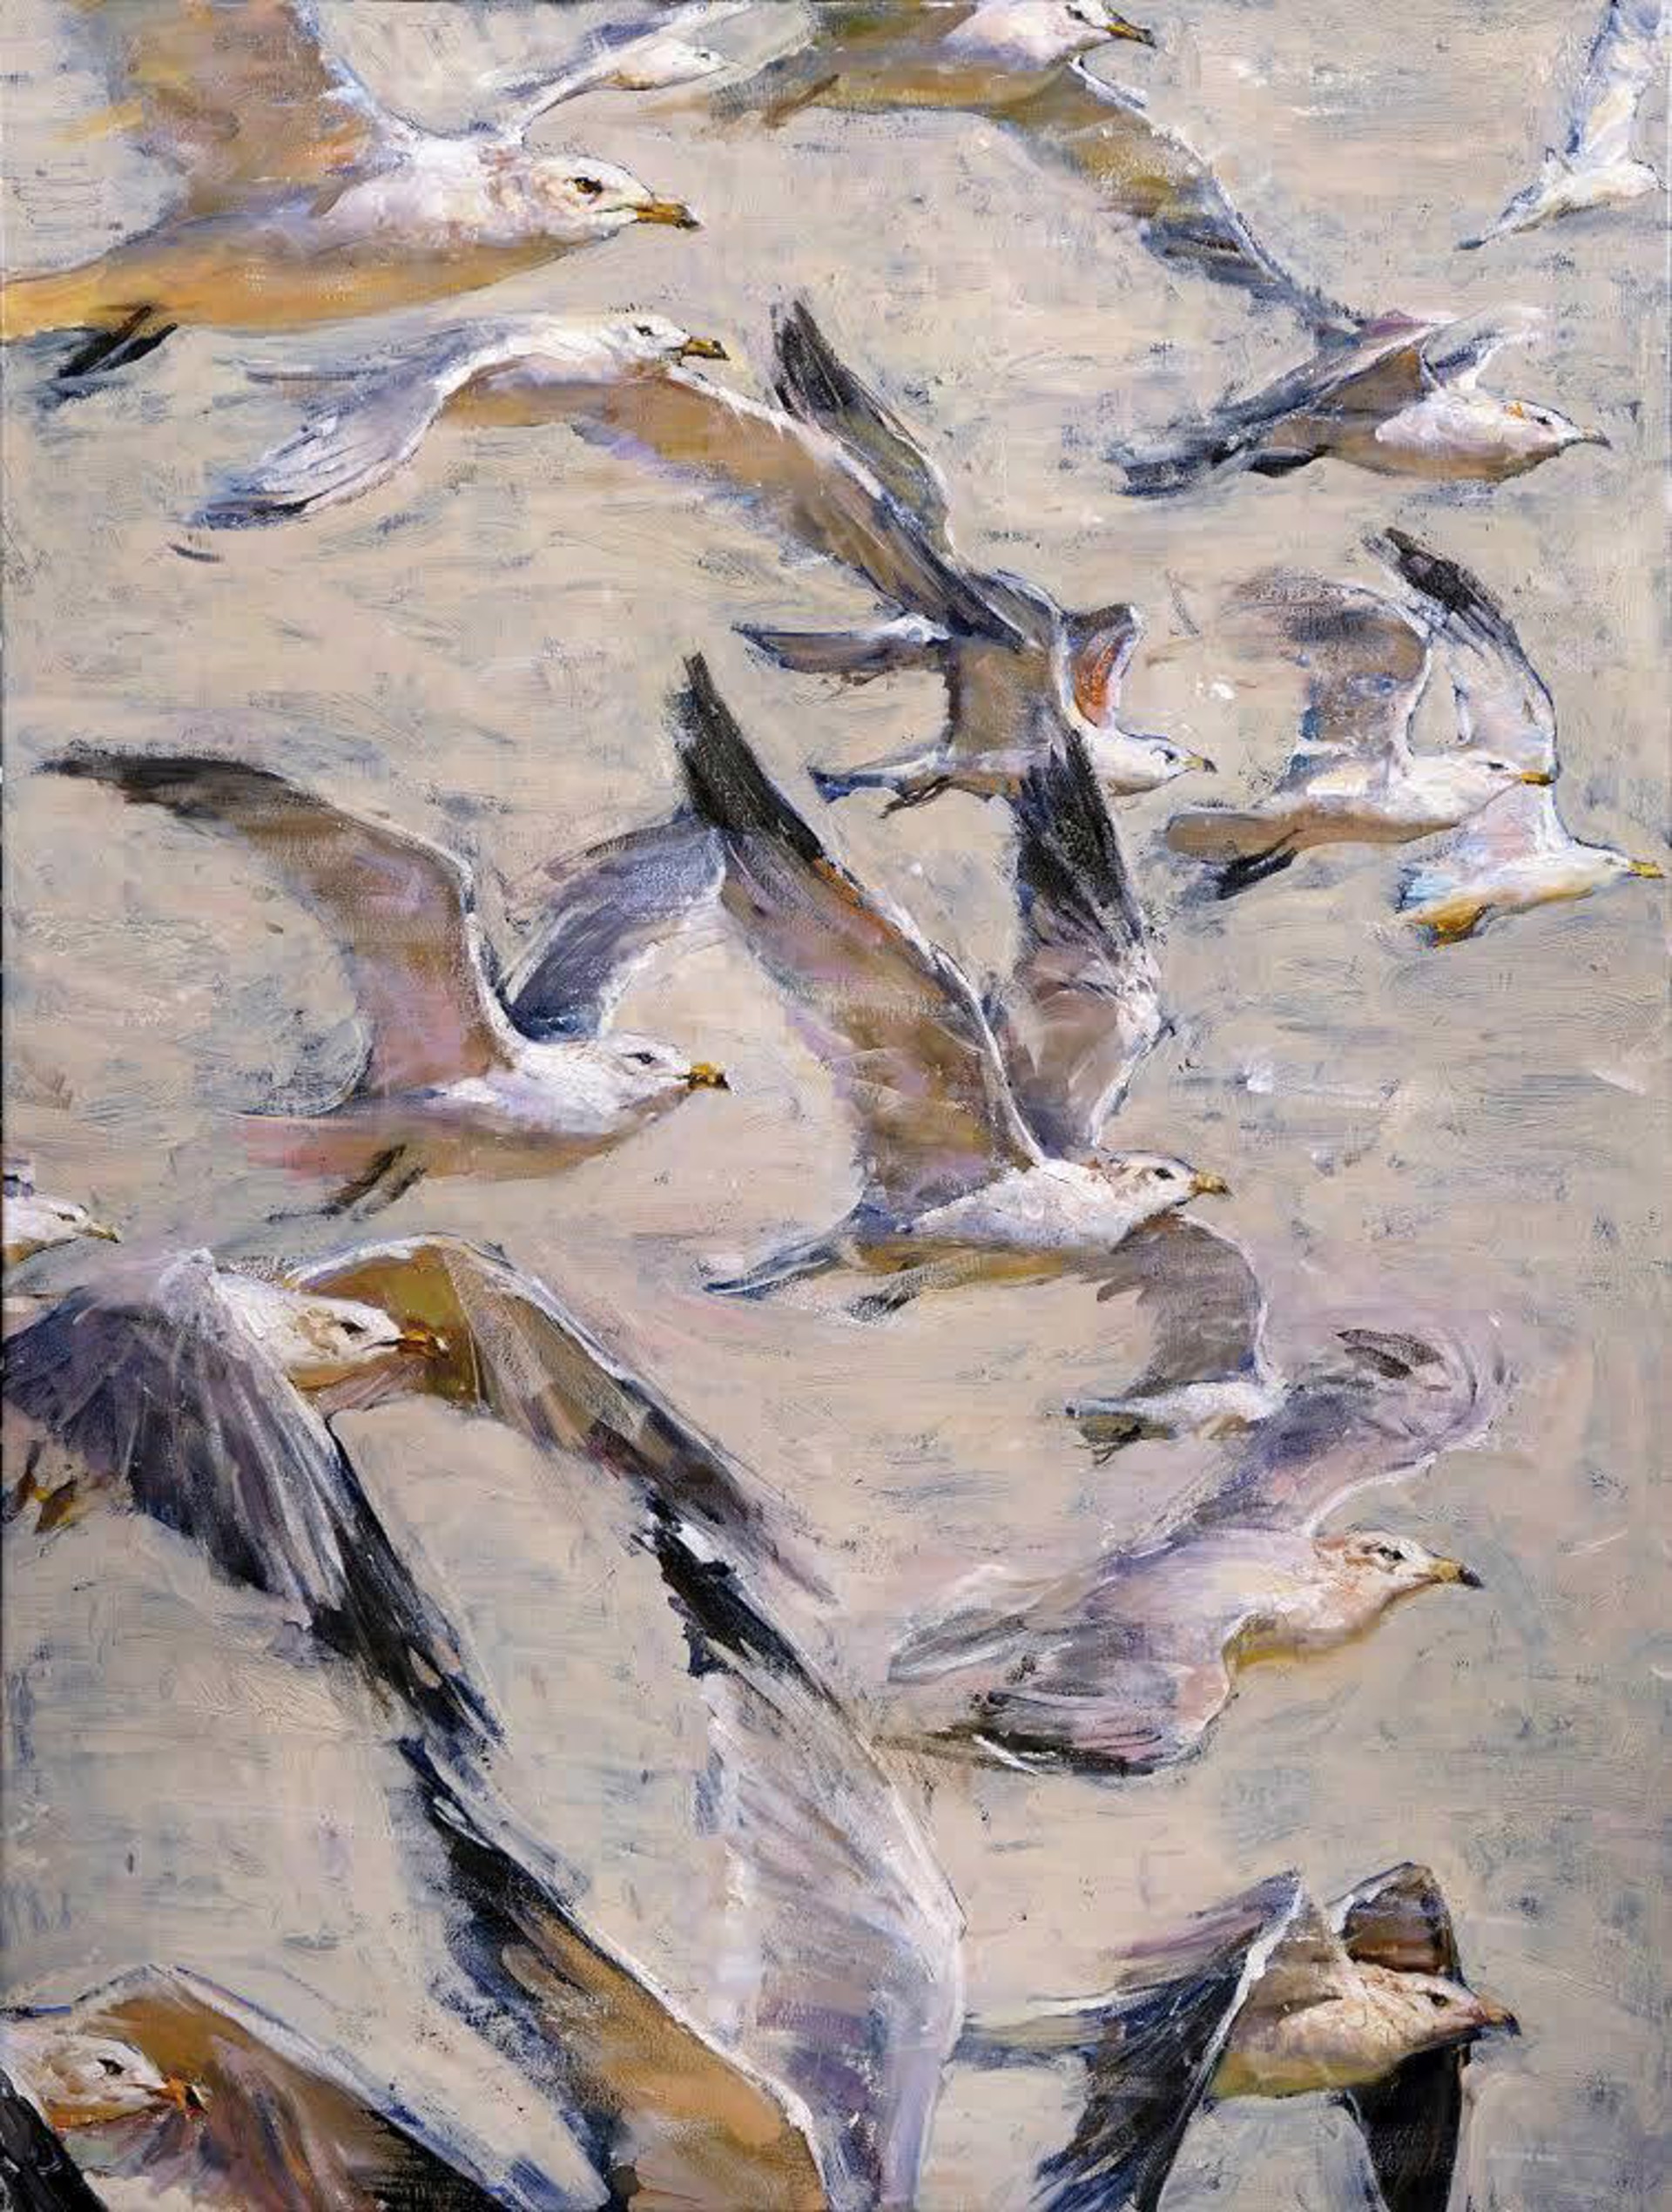 Seagulls by Derek Penix